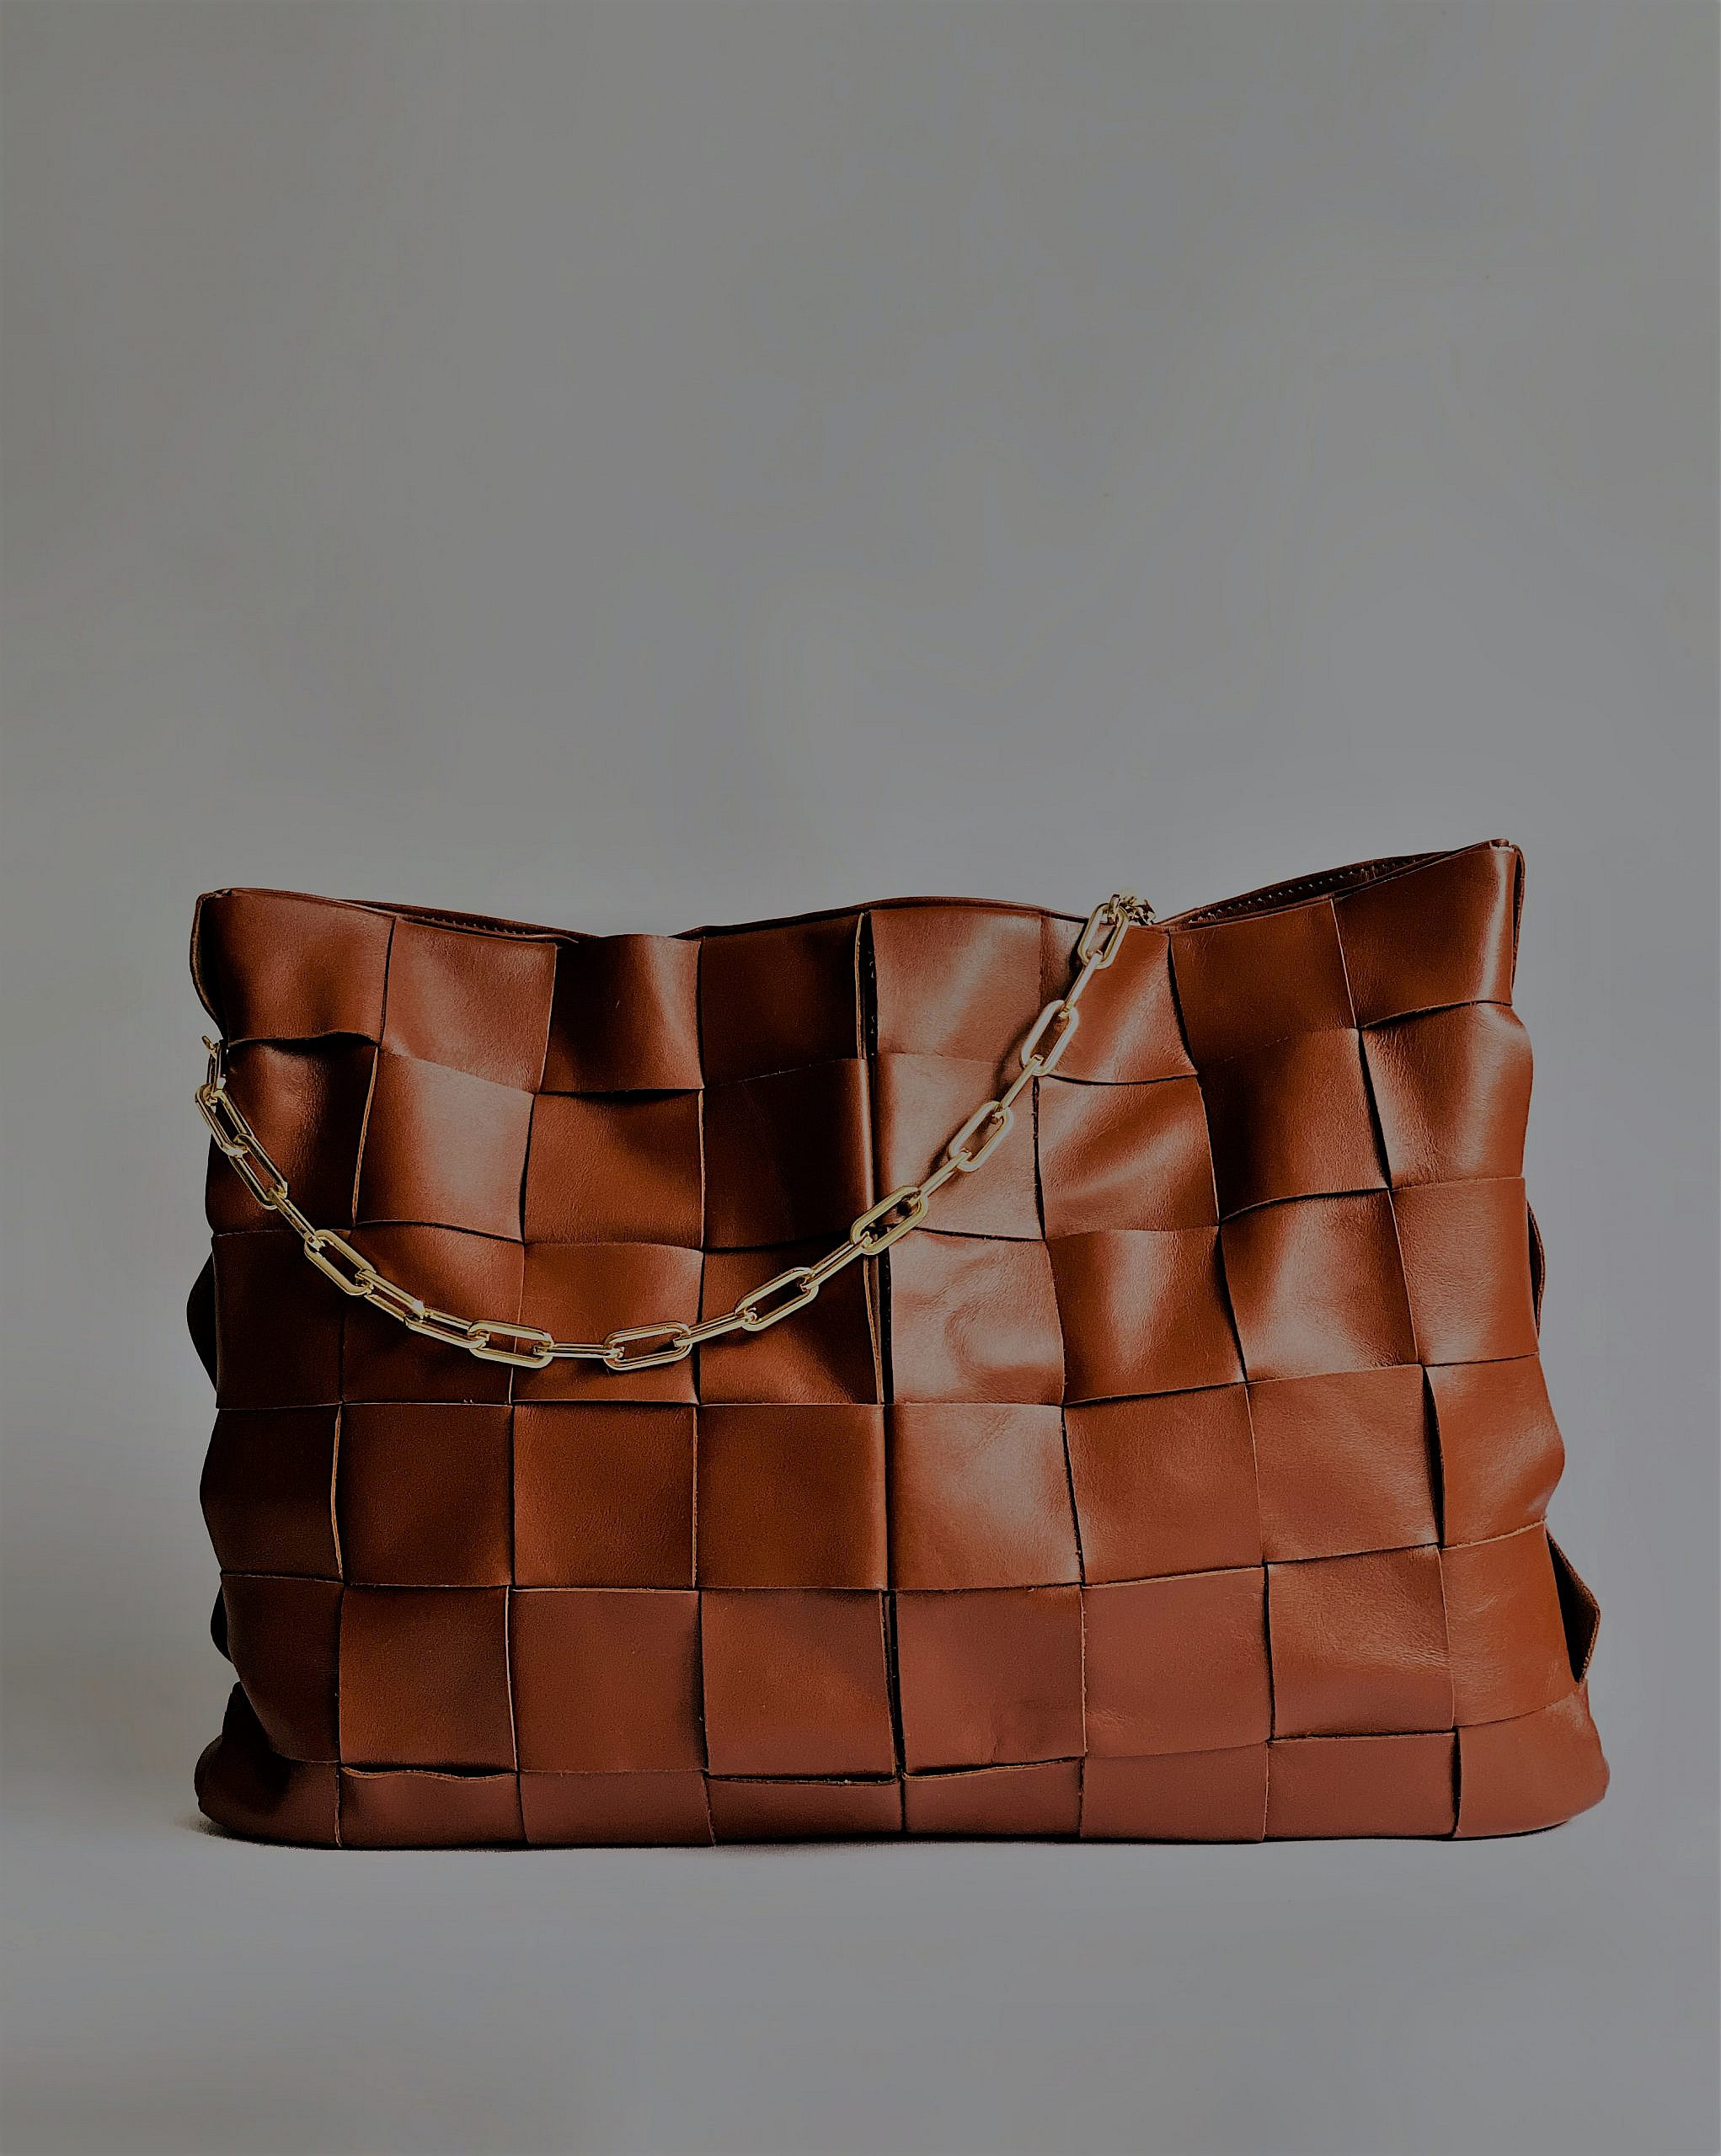 Advene: the sustainable handbag brand